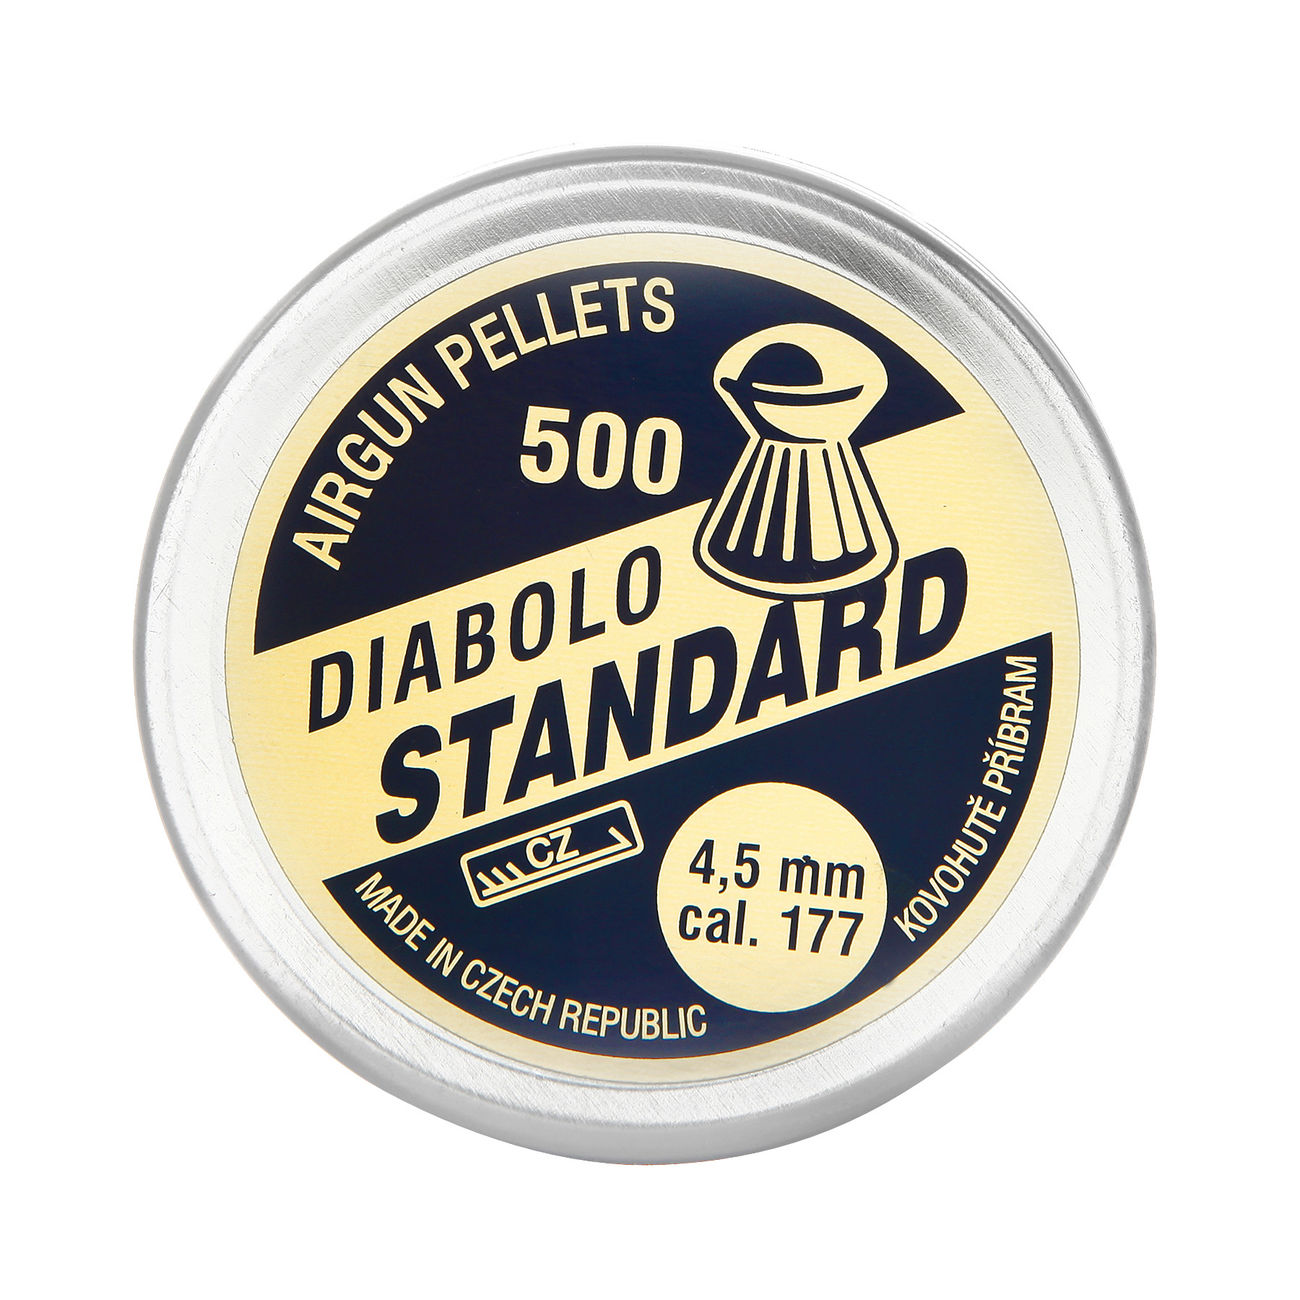 Kovohute Diabolo Standard 4,5 mm 500 Stück Bild 3